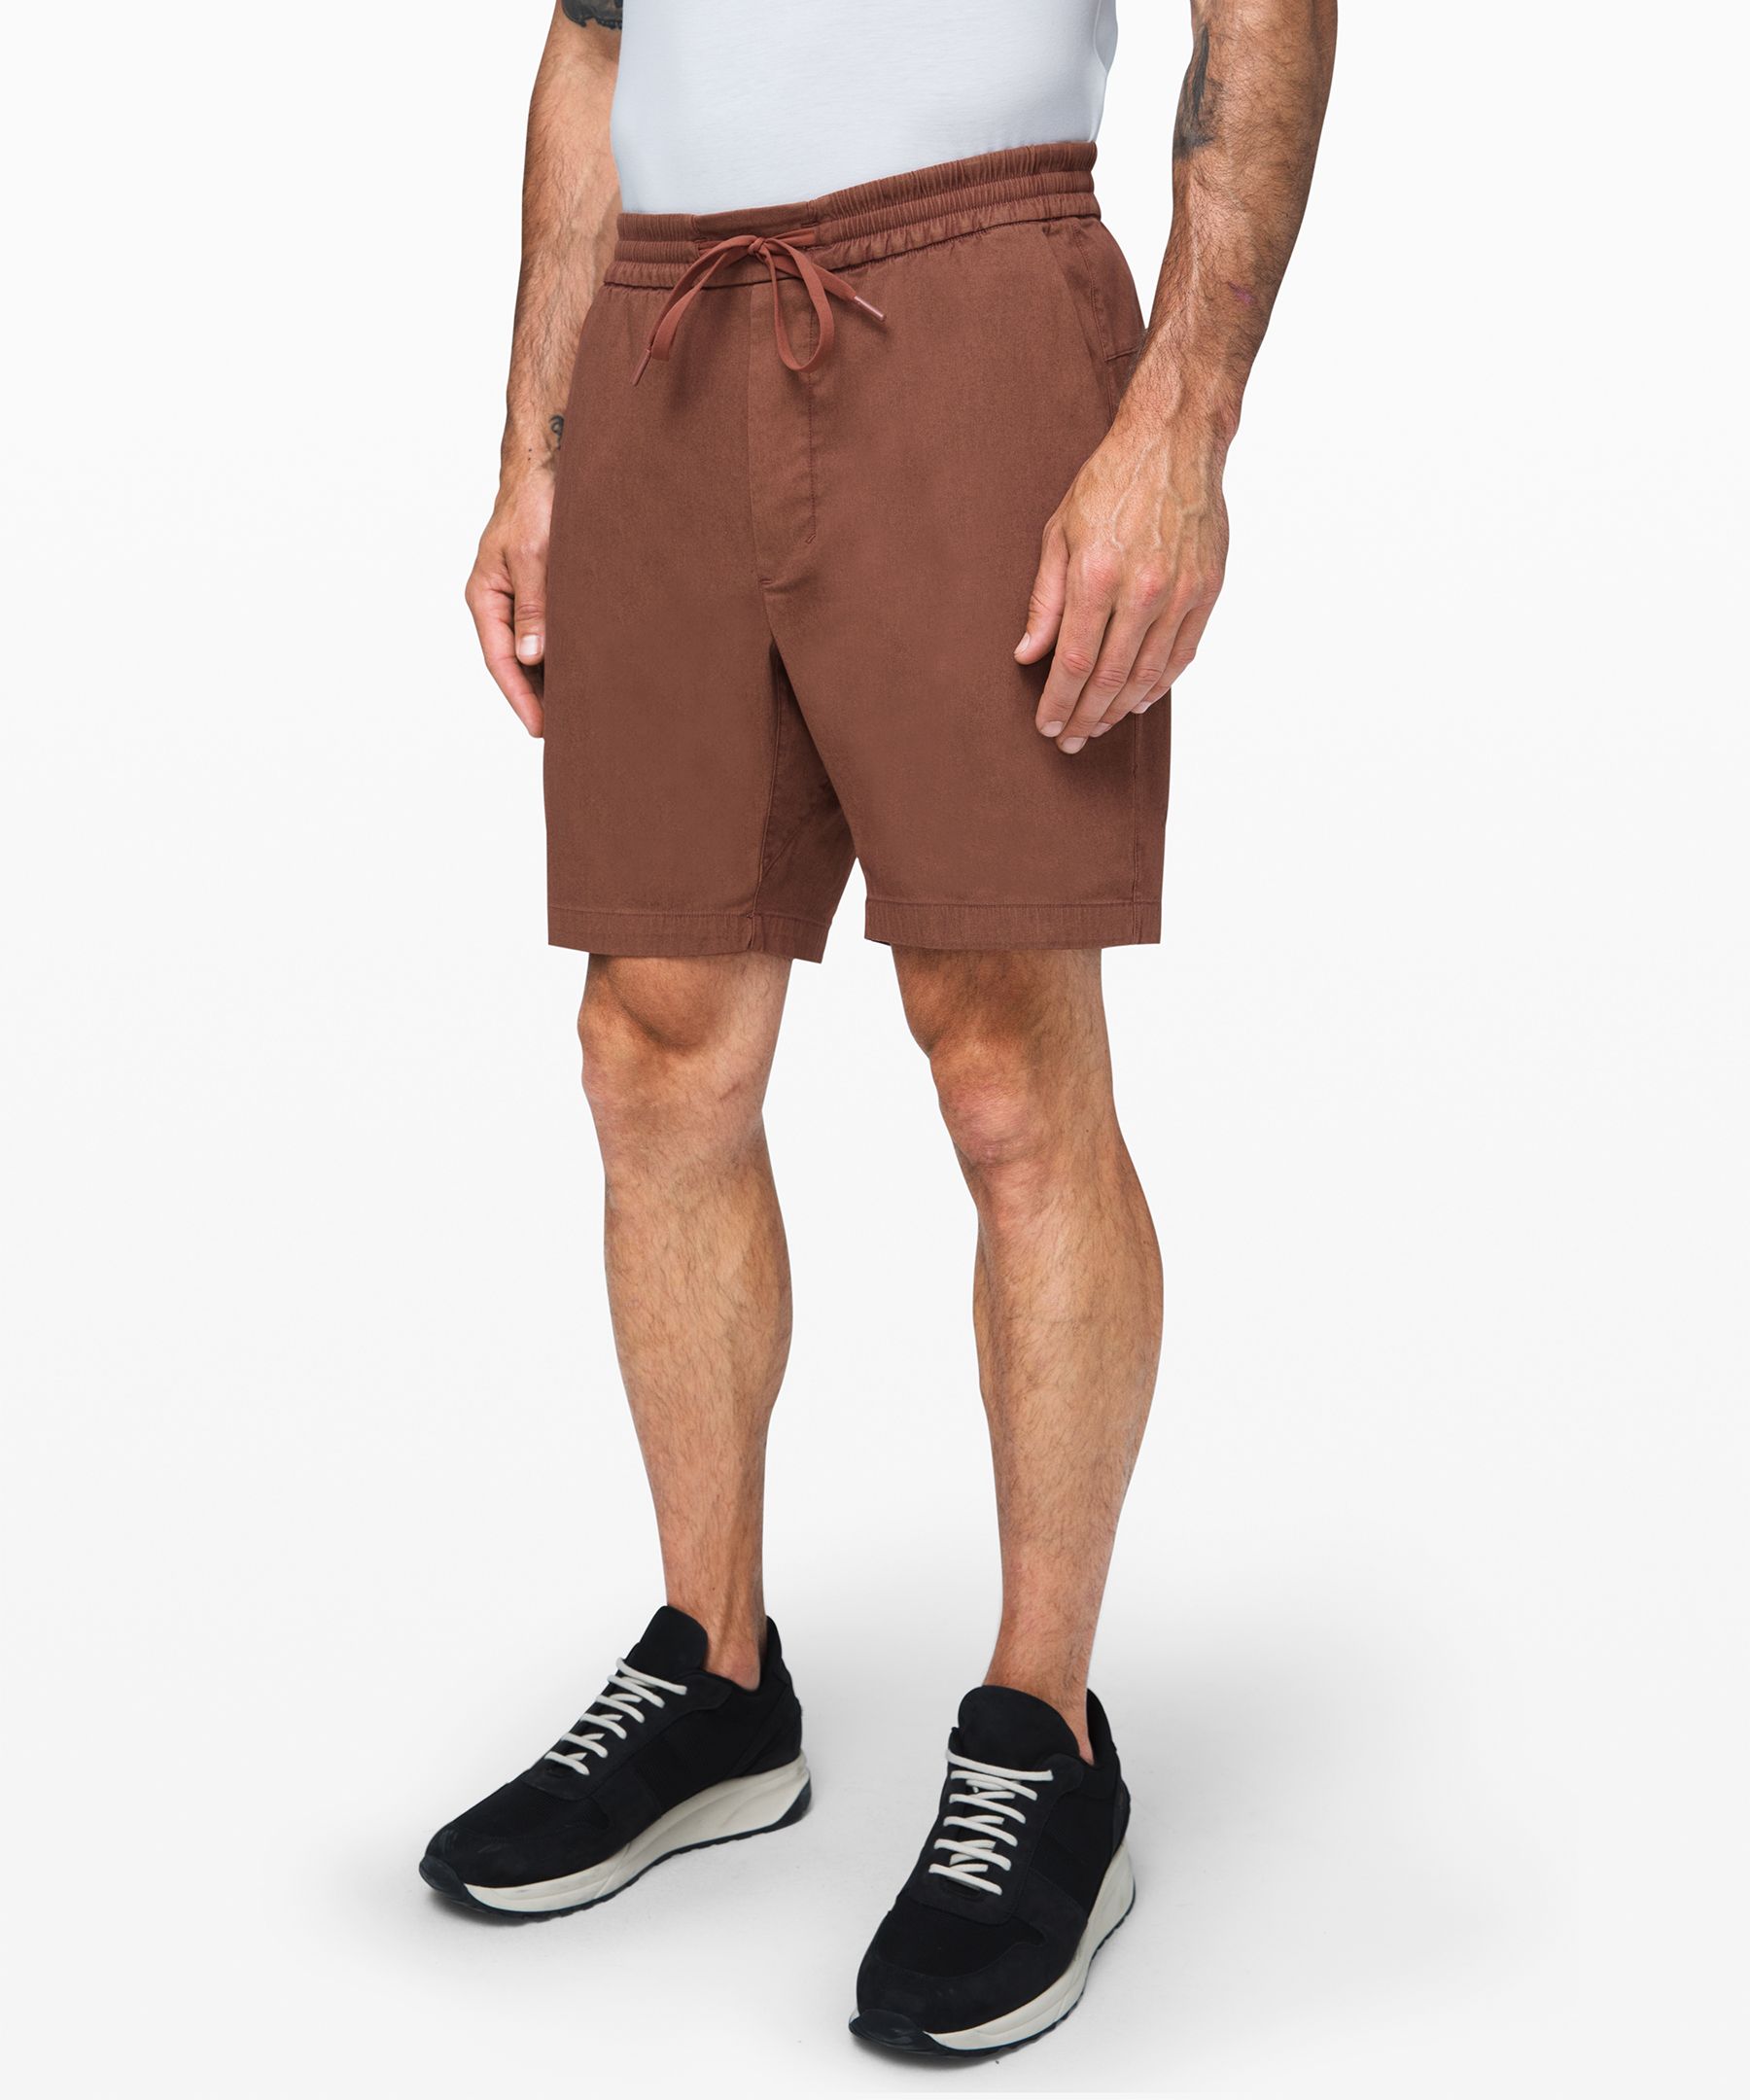 lululemon bowline shorts reviewed